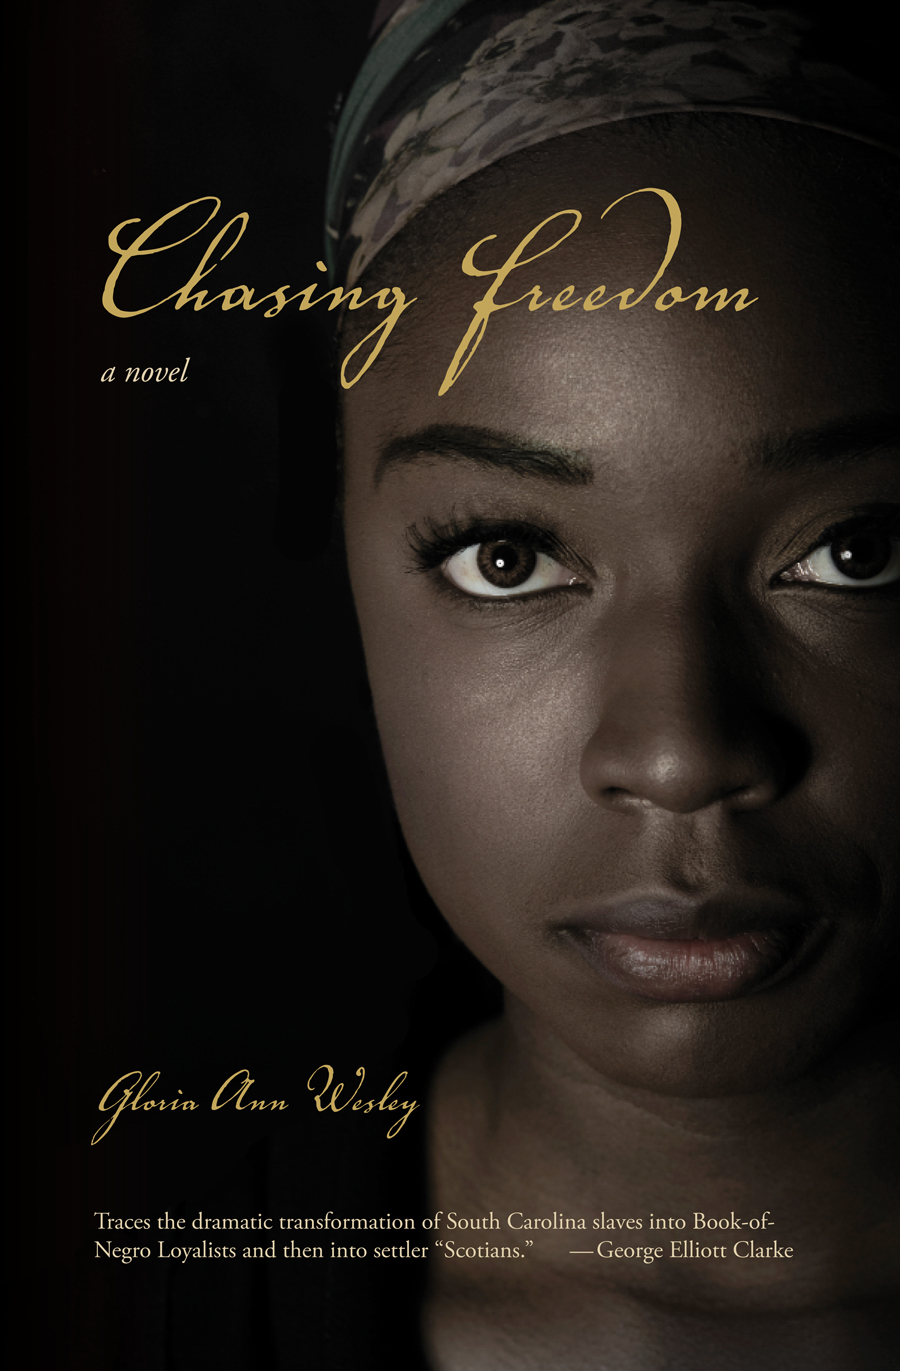 Chasing Freedom (2013) by Gloria Ann Wesley